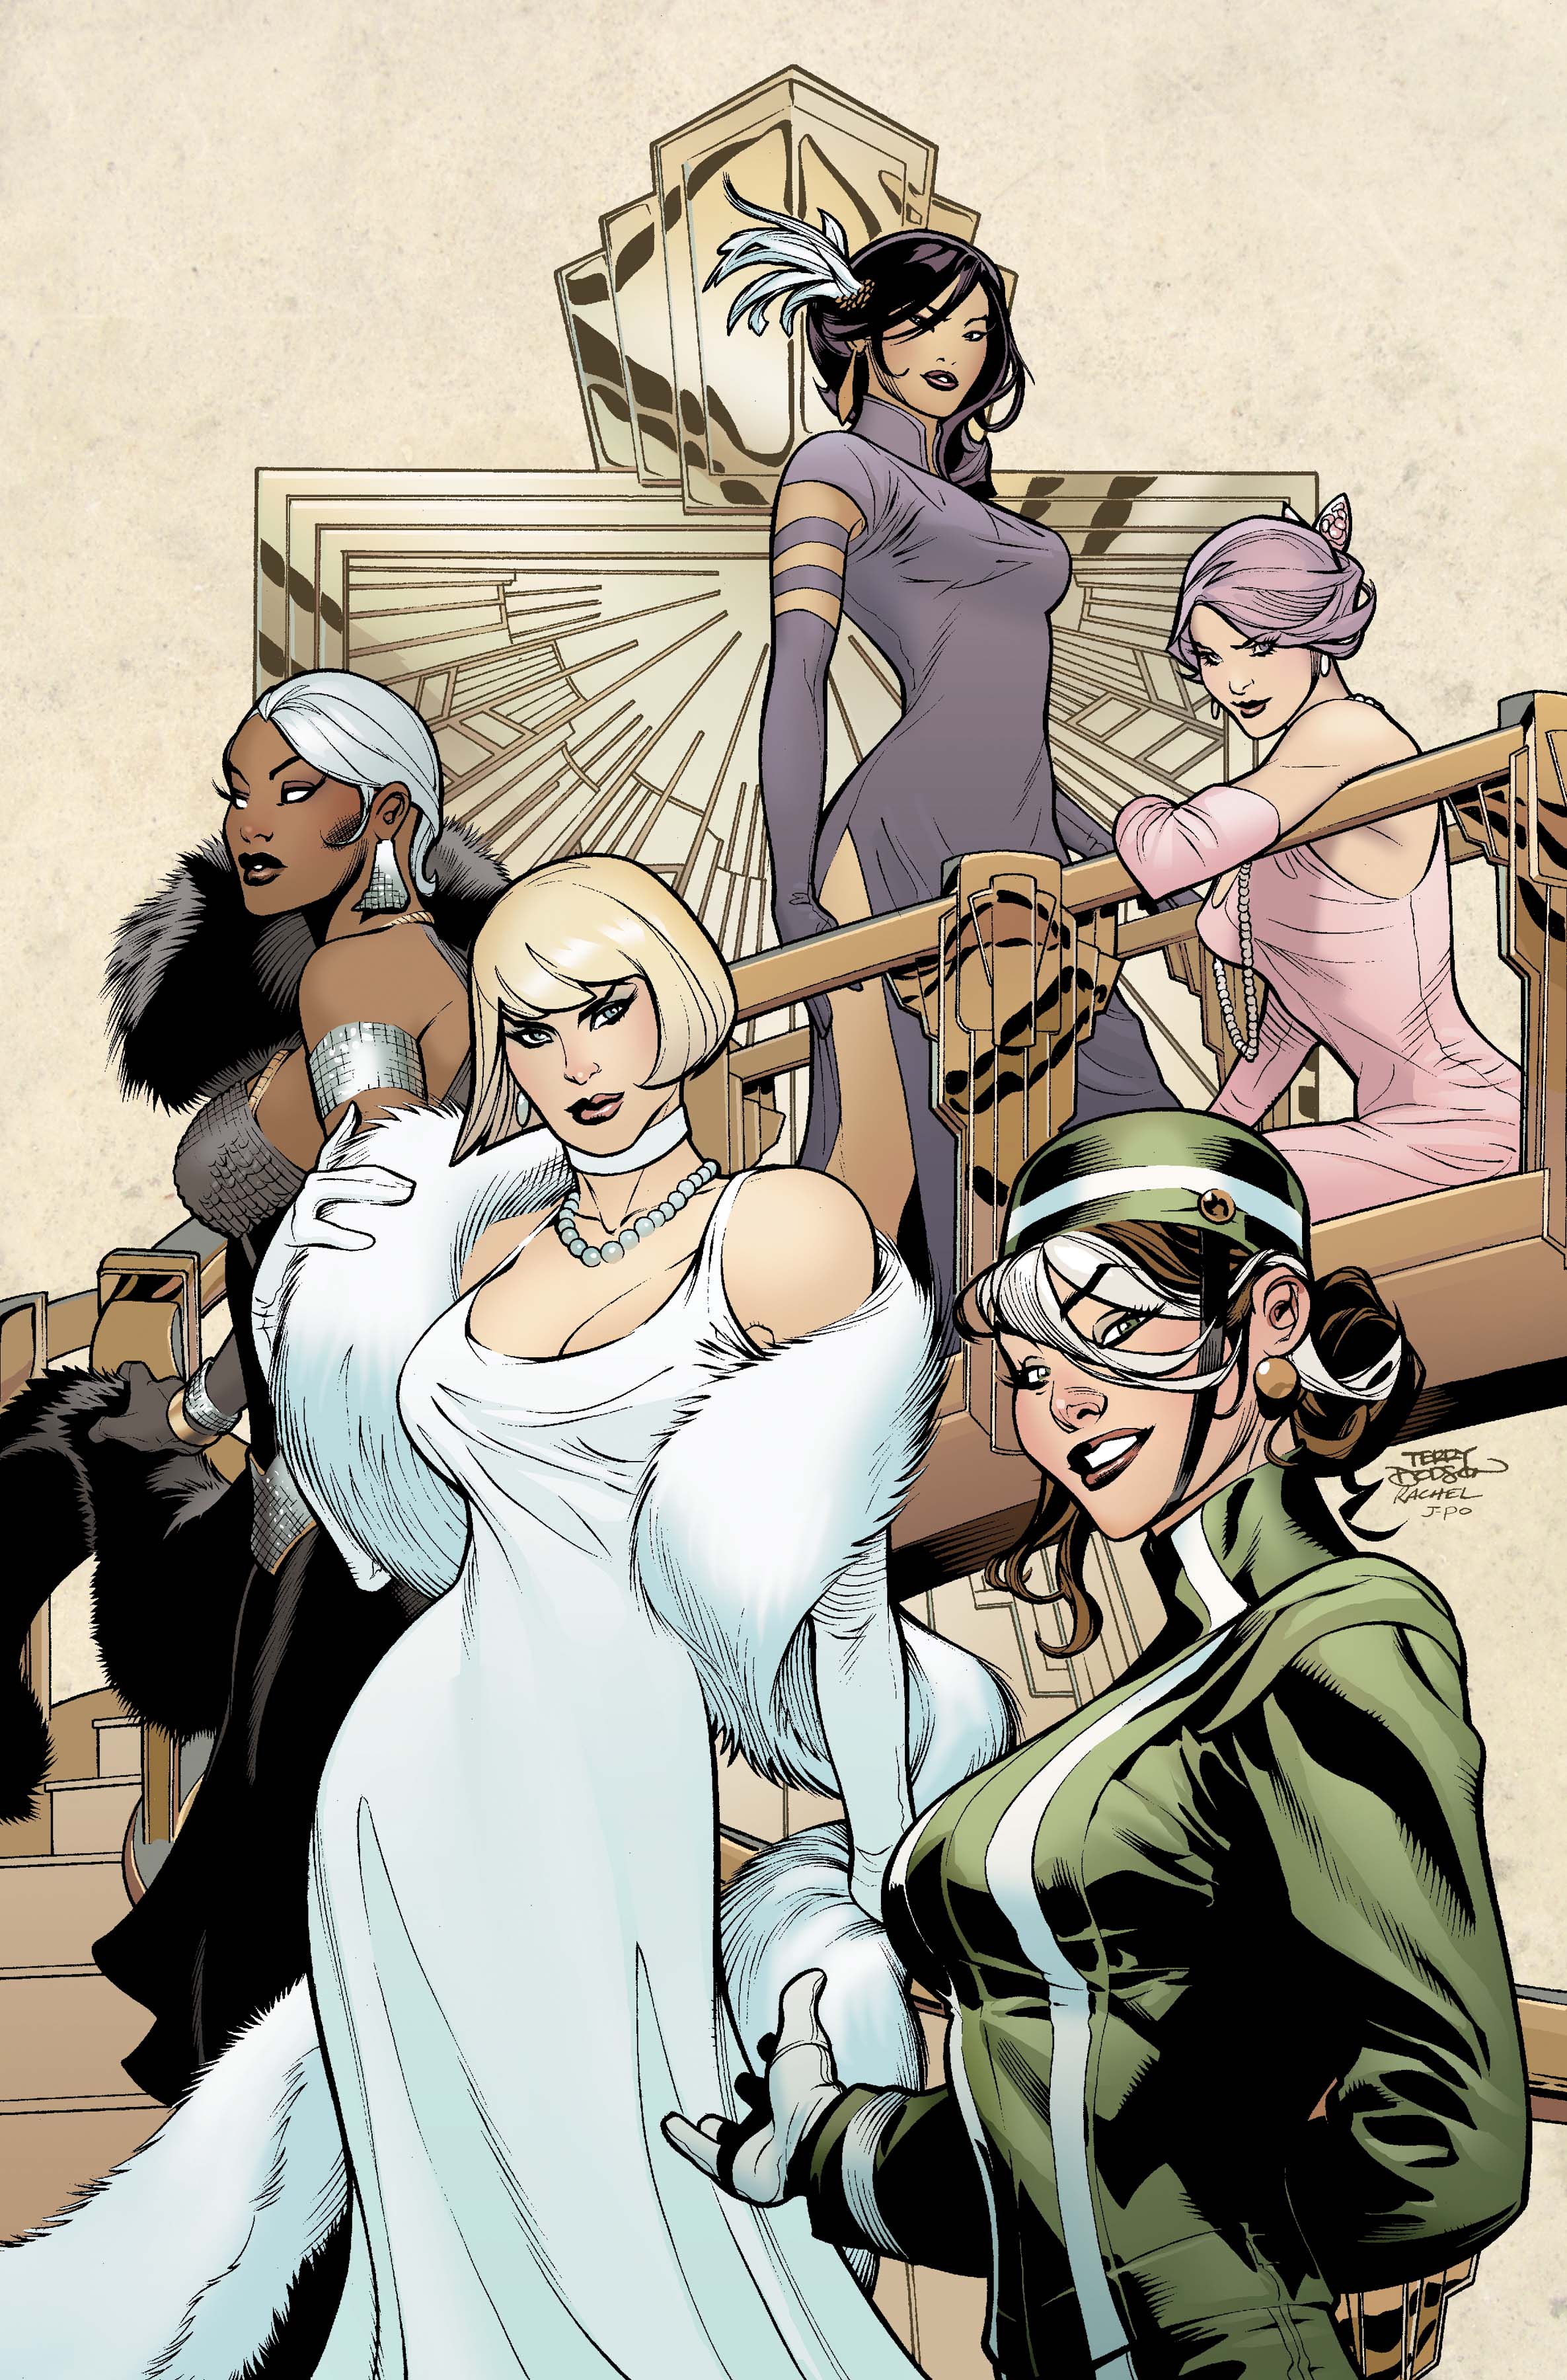 X-Men, Псайлок, Разбойник, Марвел комиксы, Терри Додсон, комиксы девочки, Эмма Фрост, платья, Шторм ( комиксы характер ), жутко Xmen - обои на рабочий стол